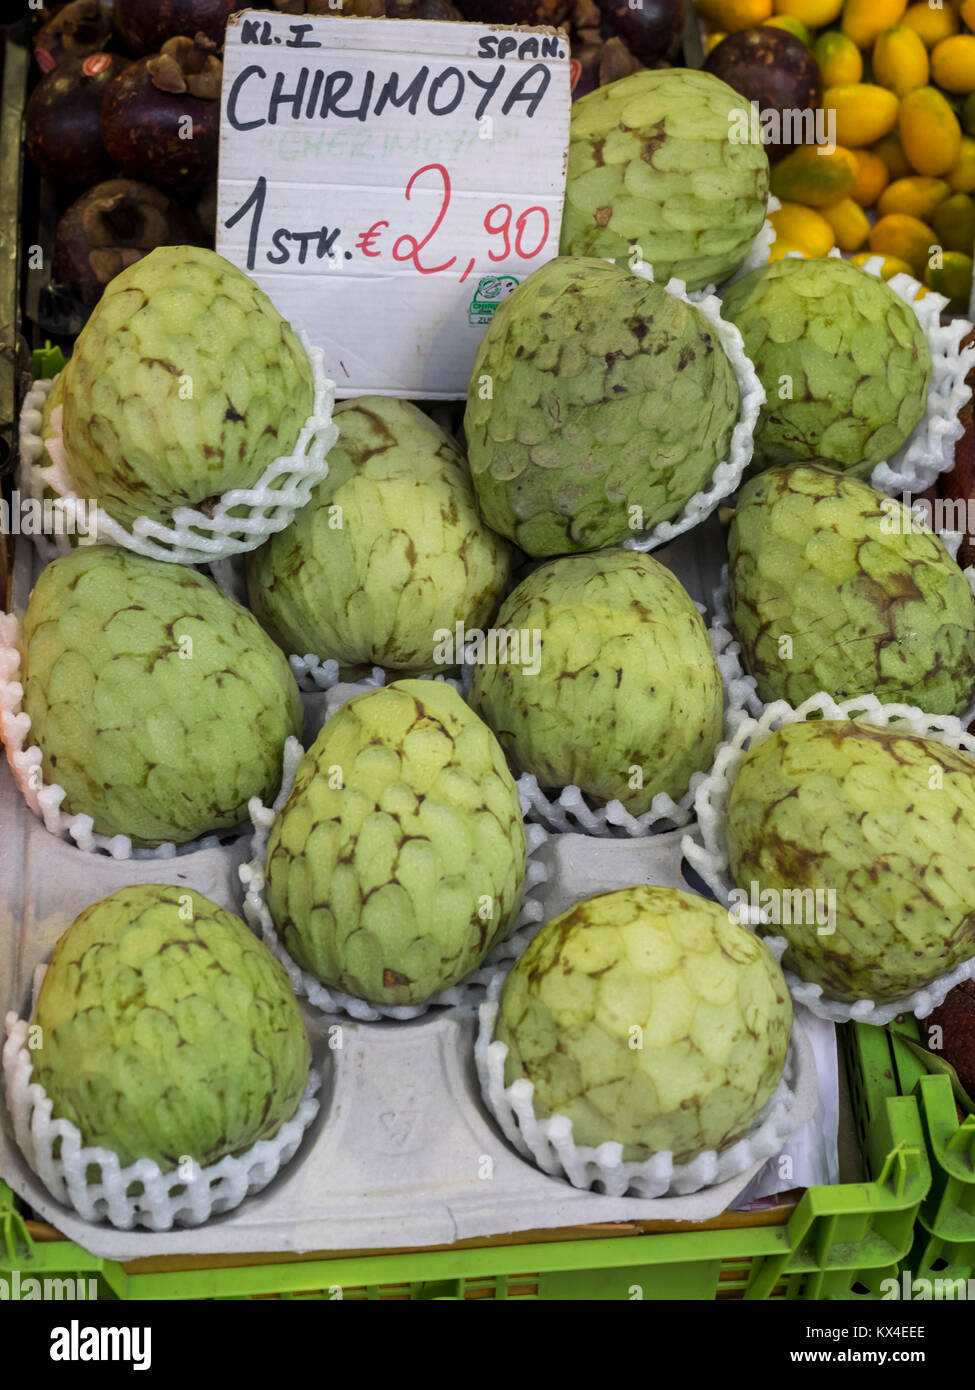 VIENNA, AUSTRIA - DECEMBER 04, 2017:  South American Cherimoya (Chirimoya) Fruit for sale at Naschmarkt Market Stock Photo